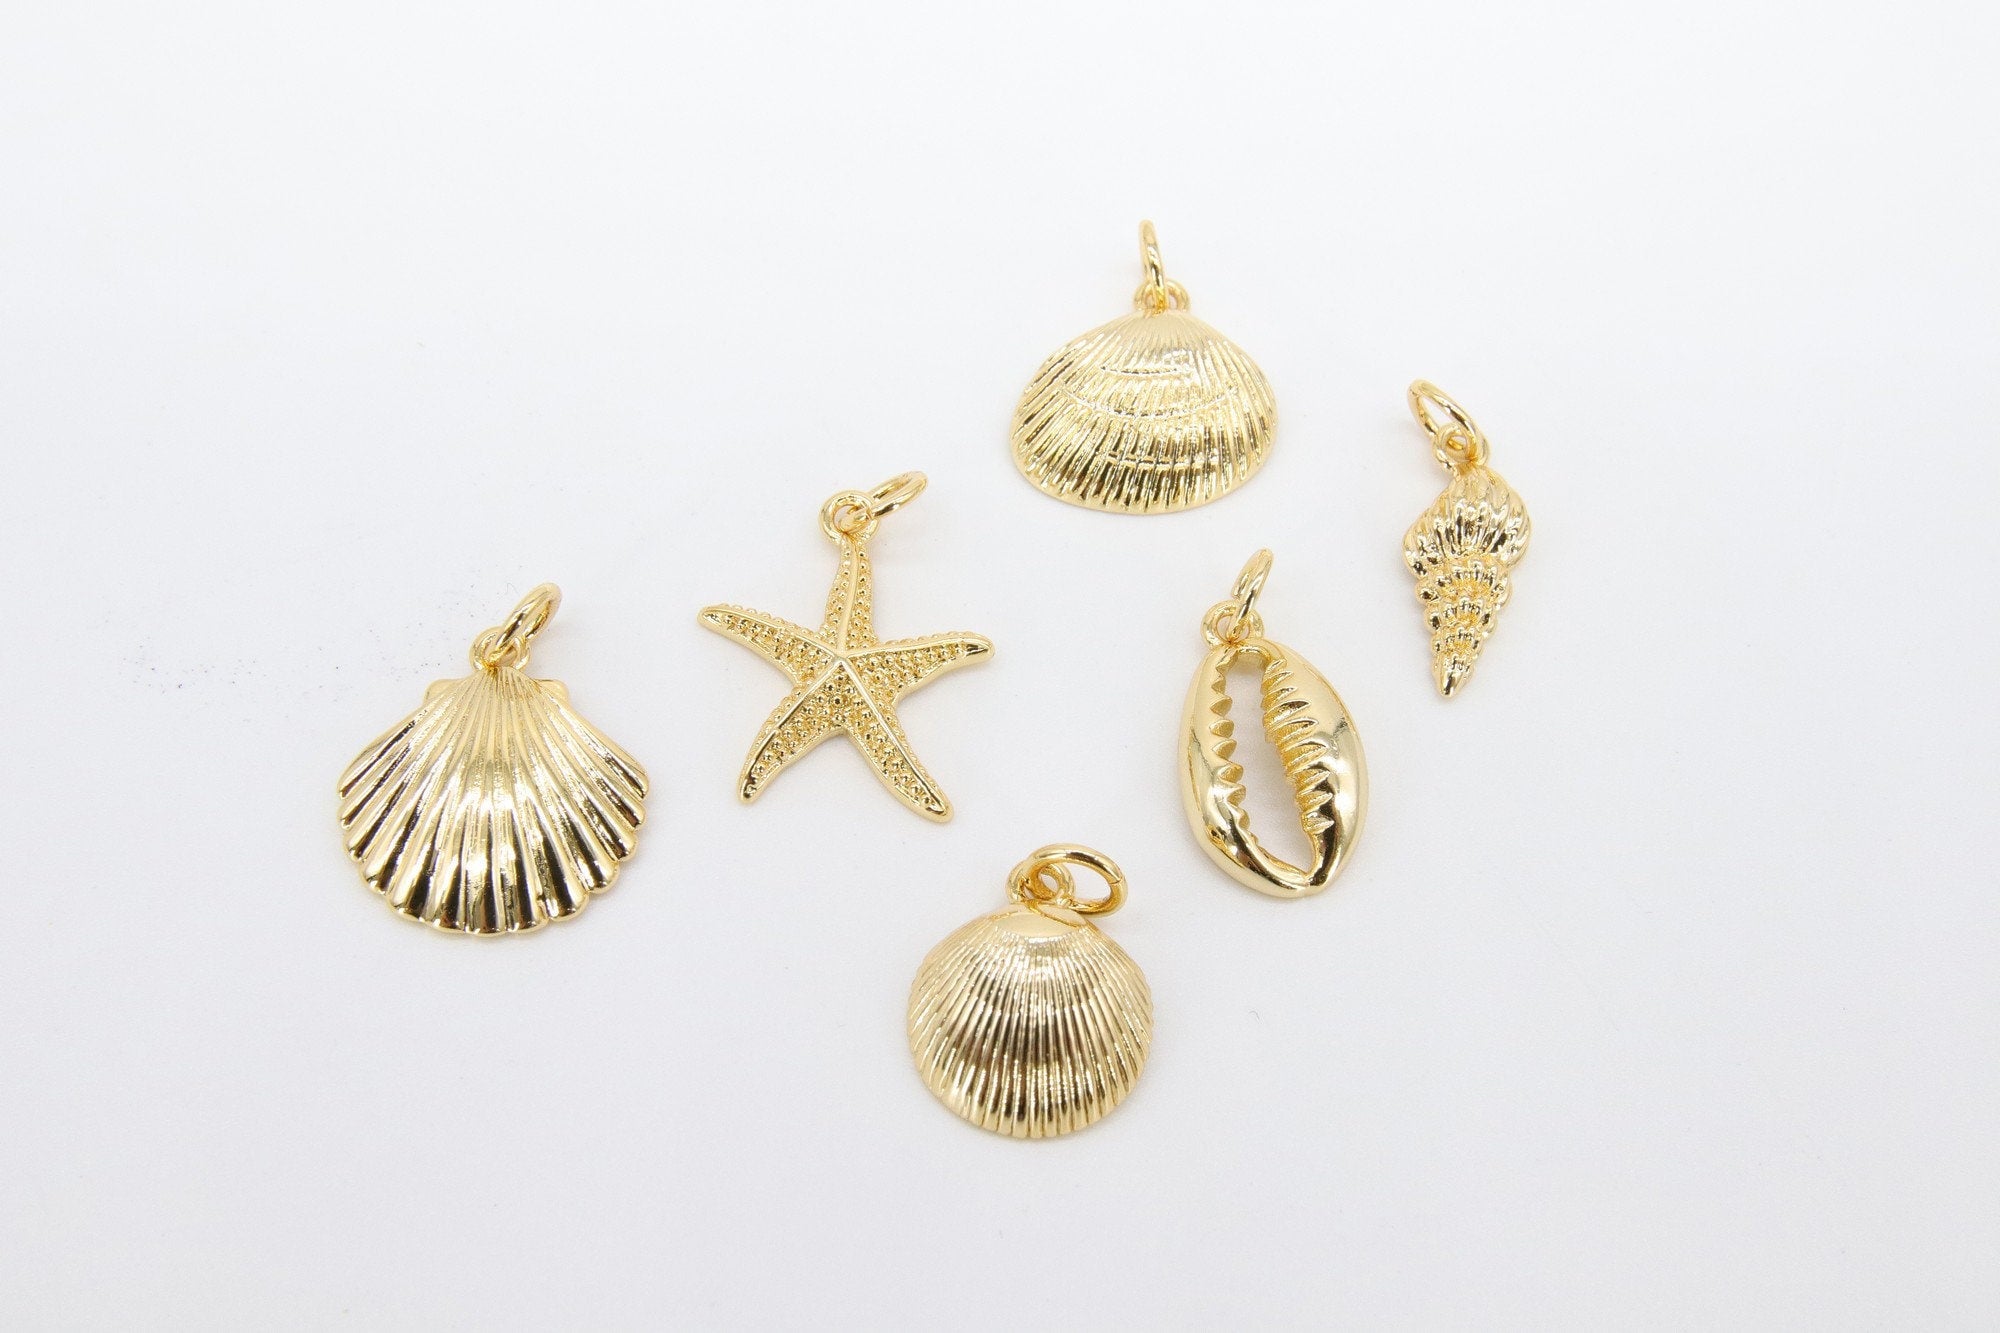 Mini Cowrie Seashell Charm, 2 Pc Gold Tiny Nautical Starfish Seashells #2646, Scallop Beach Shell Ocean Charms